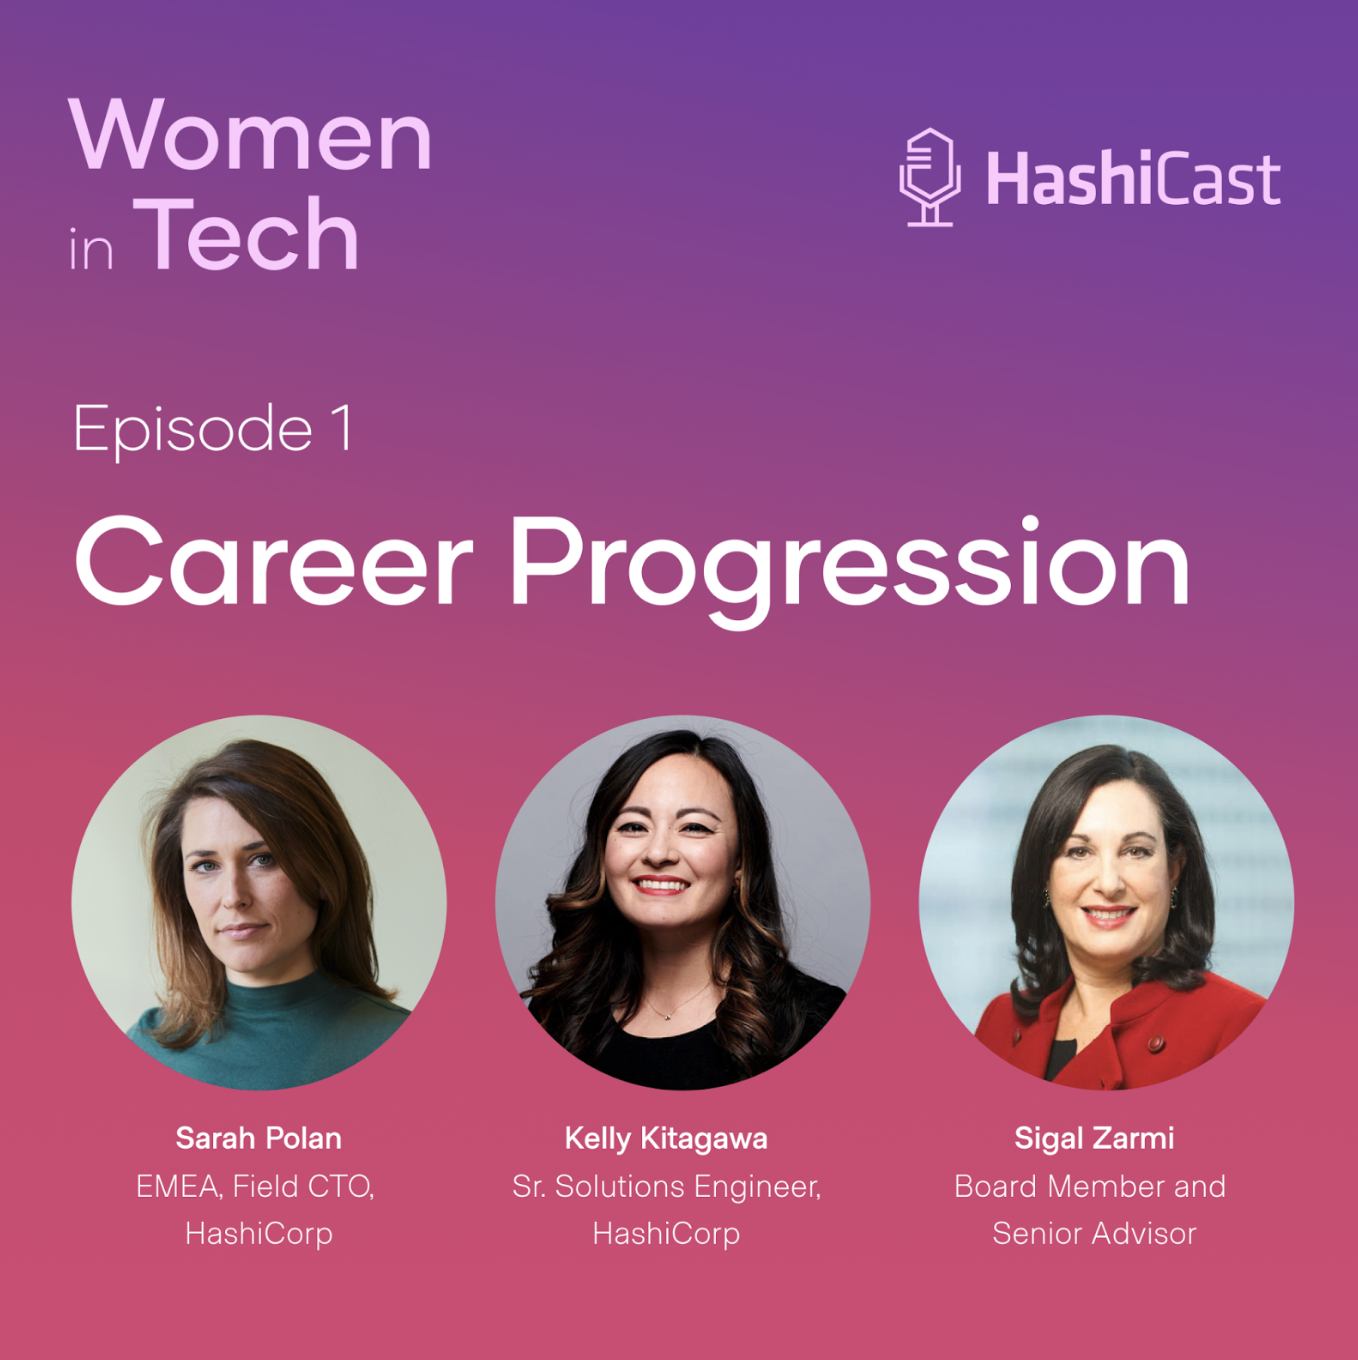 Women in Tech podcast episode 1: Career Progression